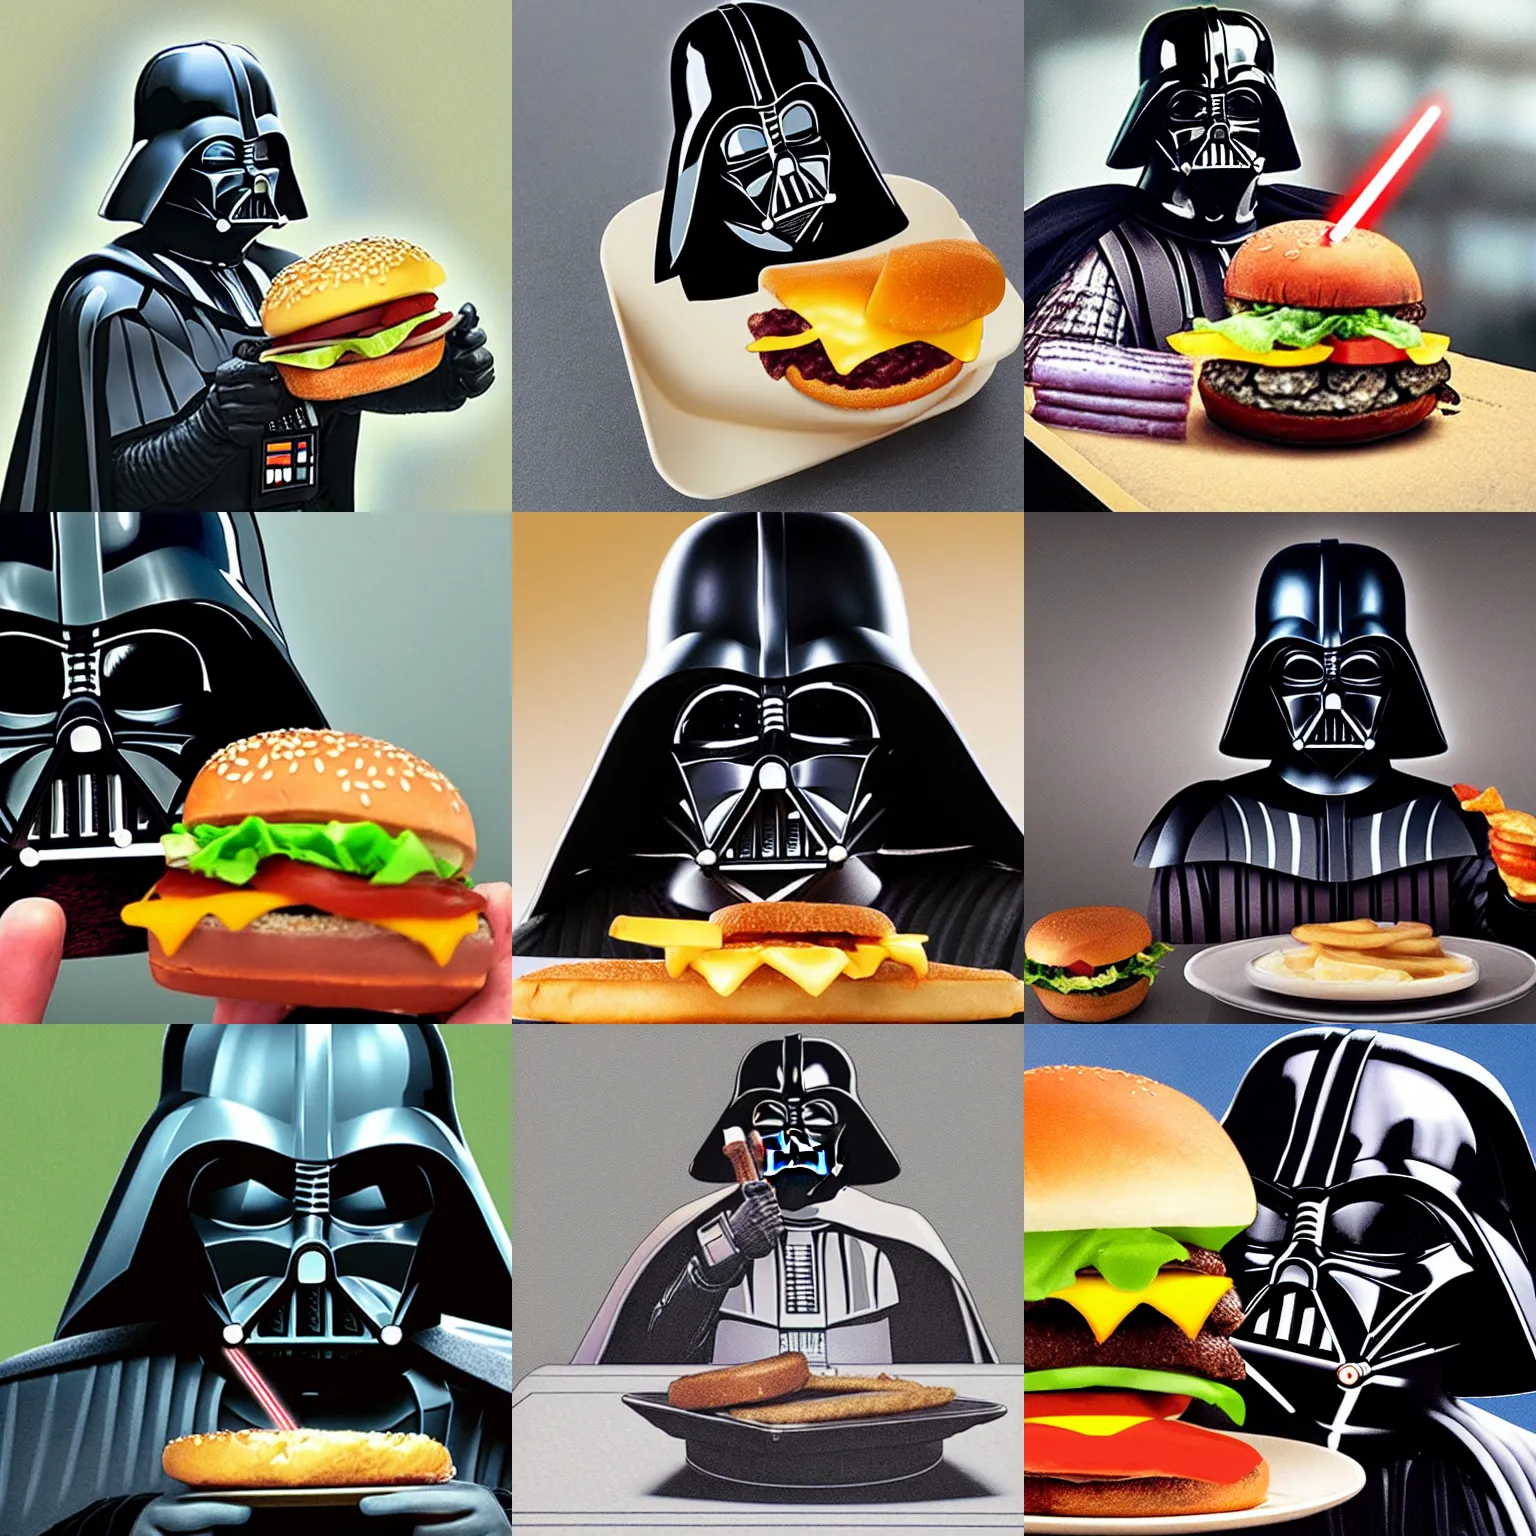 Prompt: Darth Vader eating a cheeseburger, photo realistic, award-winning, highly-detailed